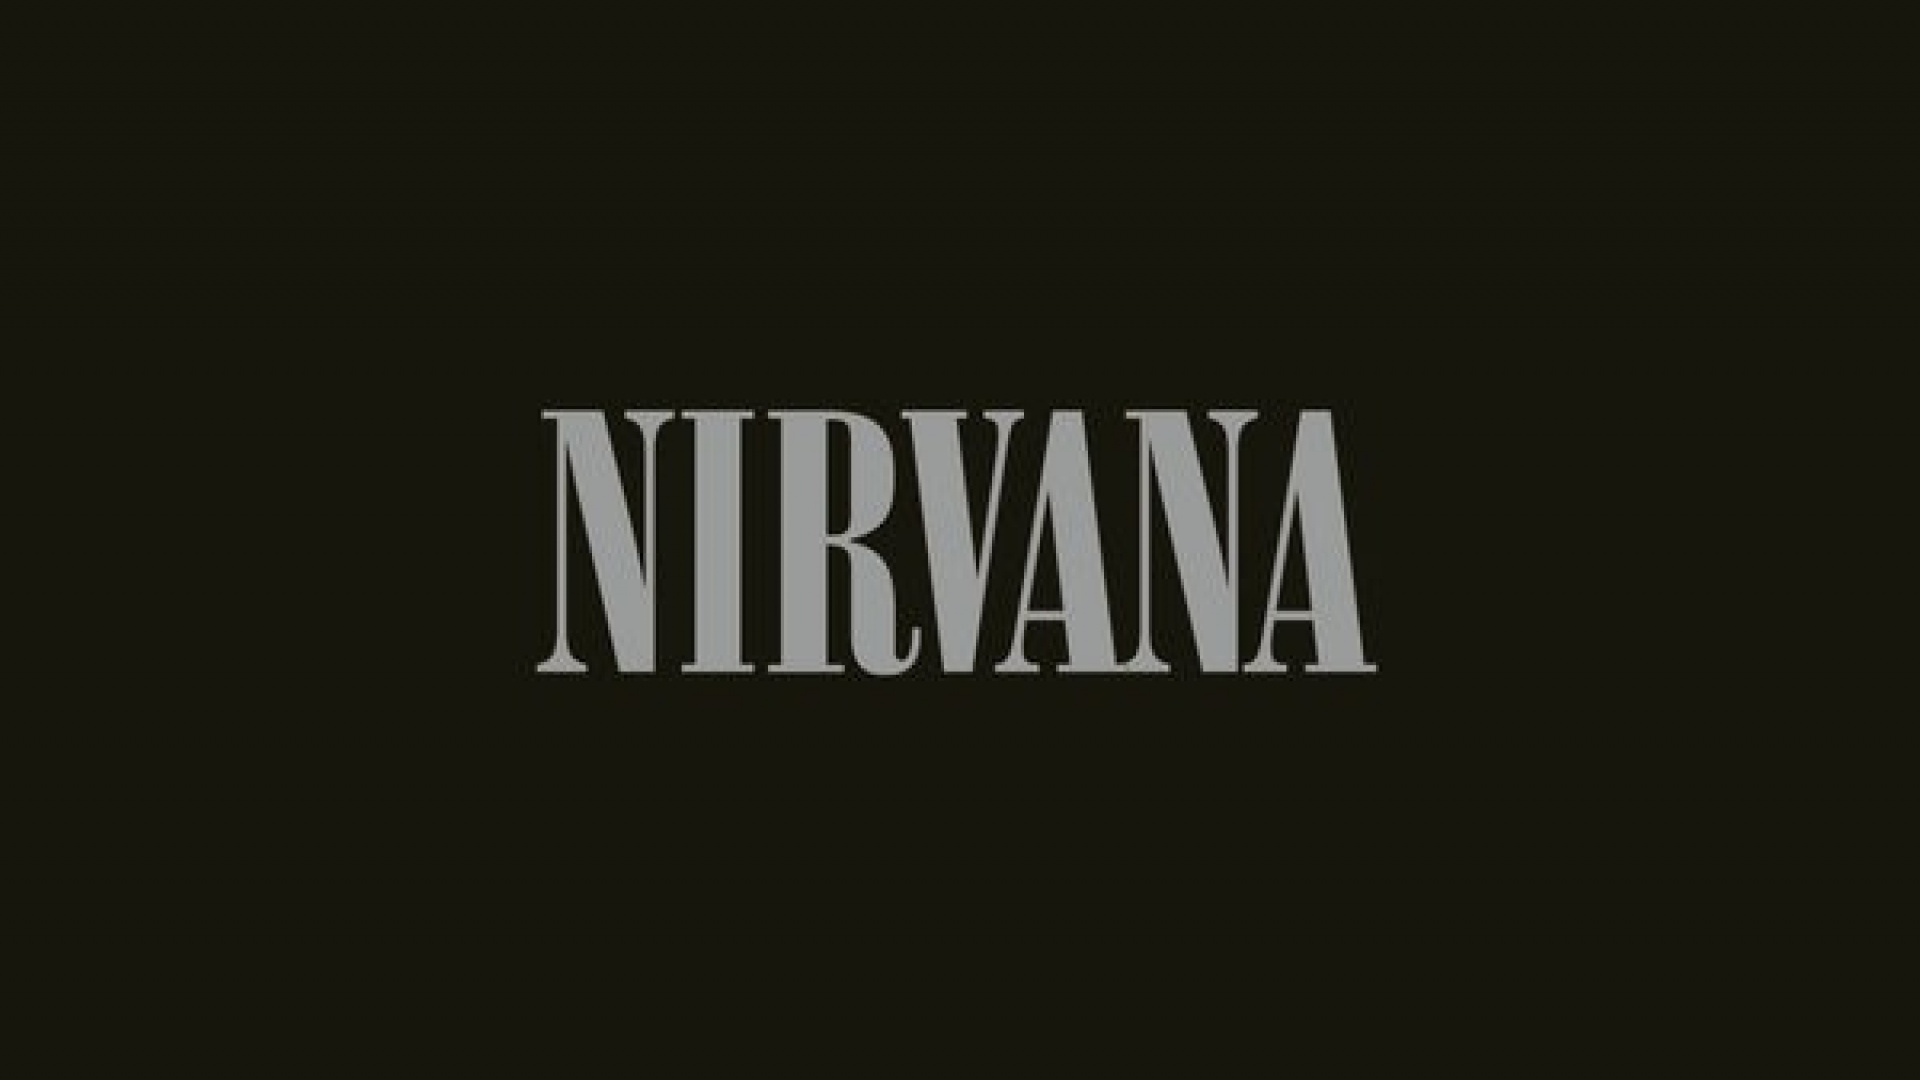 Nirvana, Album, Graphic Design, Text, Black. Wallpaper in 1920x1080 Resolution